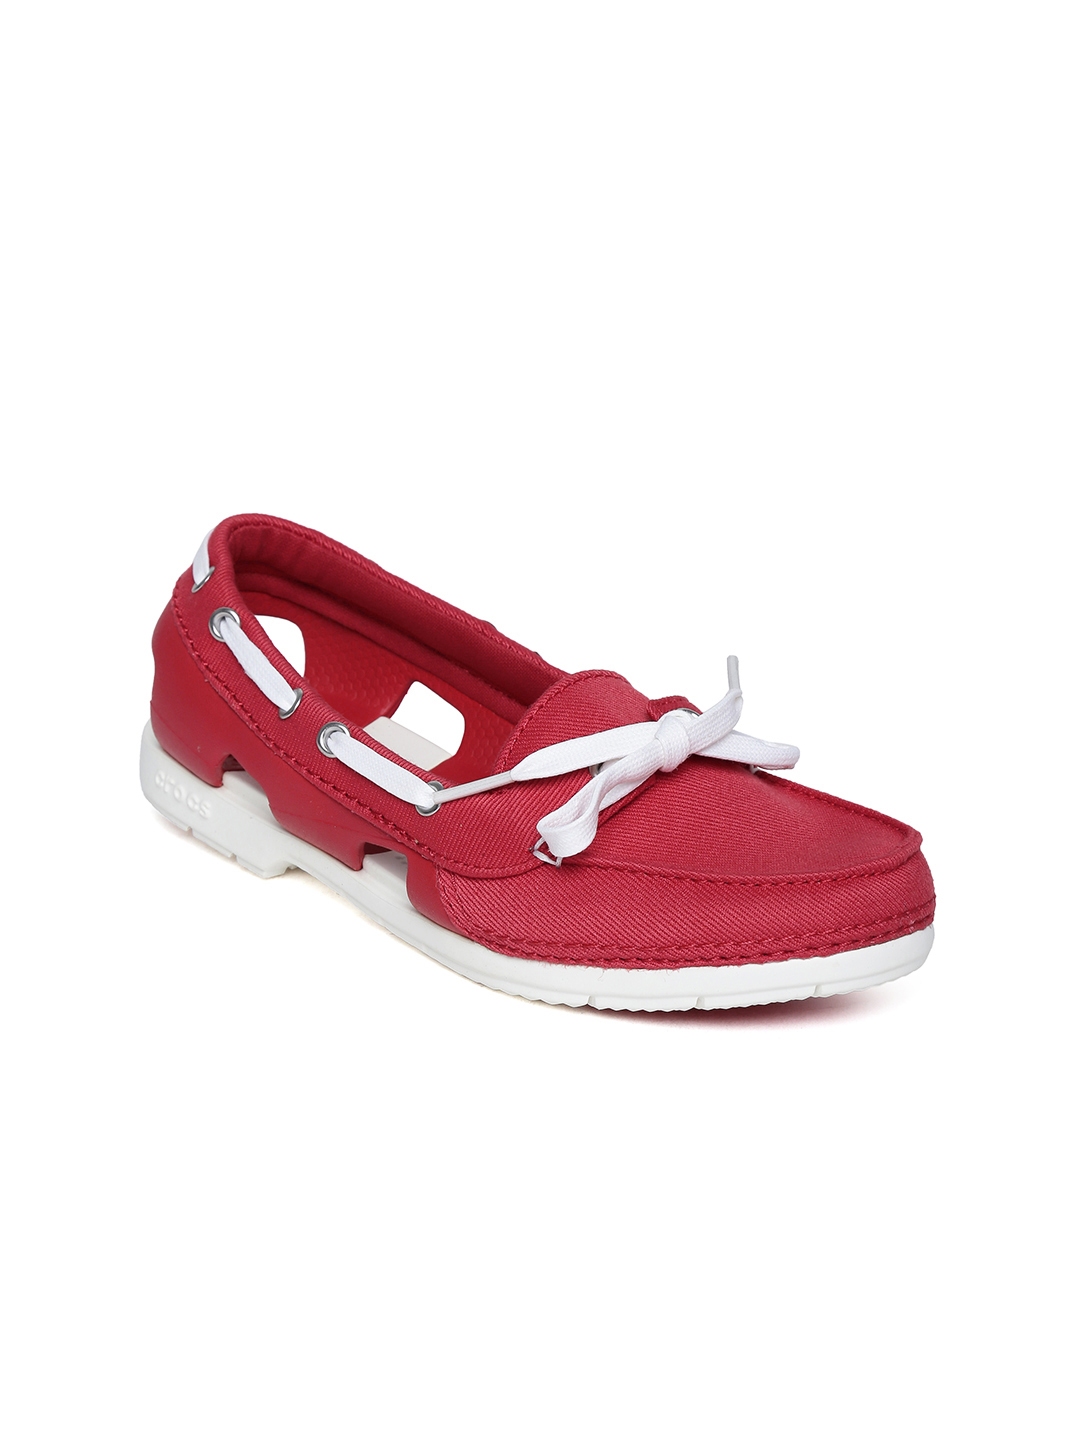 Buy Crocs Women Red Boat Shoes - Casual Shoes for Women 1217615 | Myntra